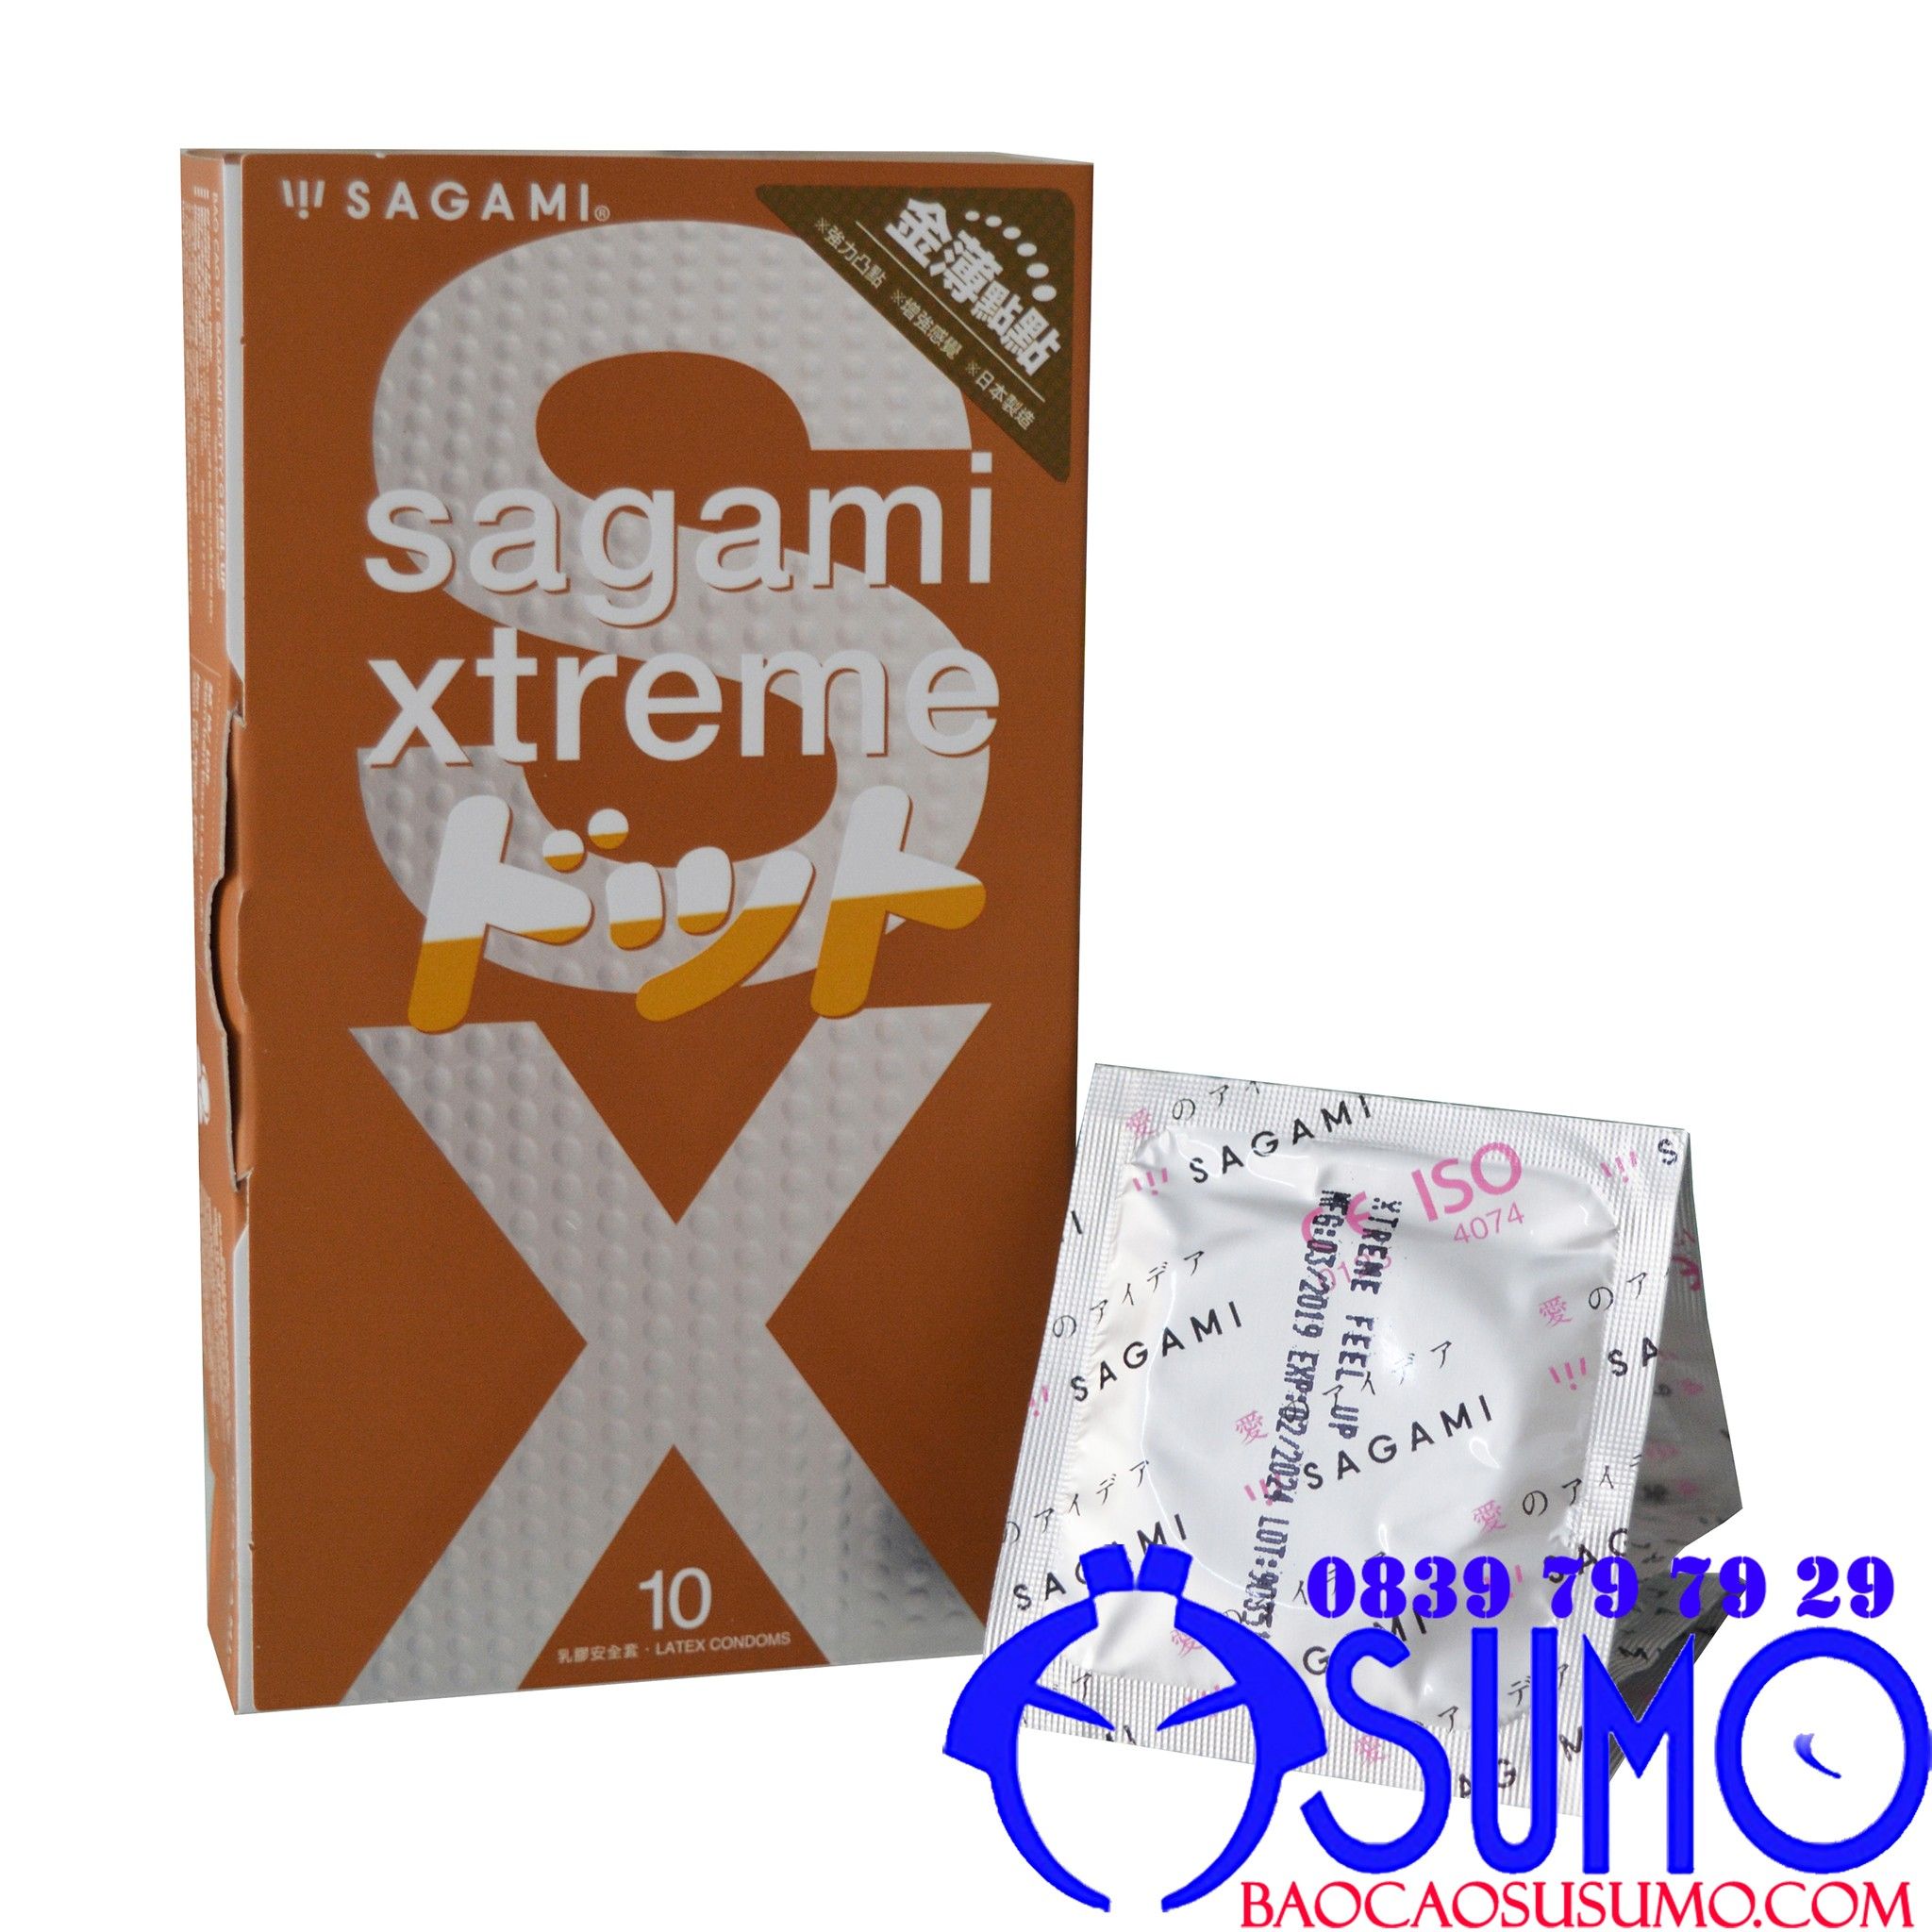 Bao cao su Sagami Xtreme Feel Up gân gai nhám hộp 10 cái